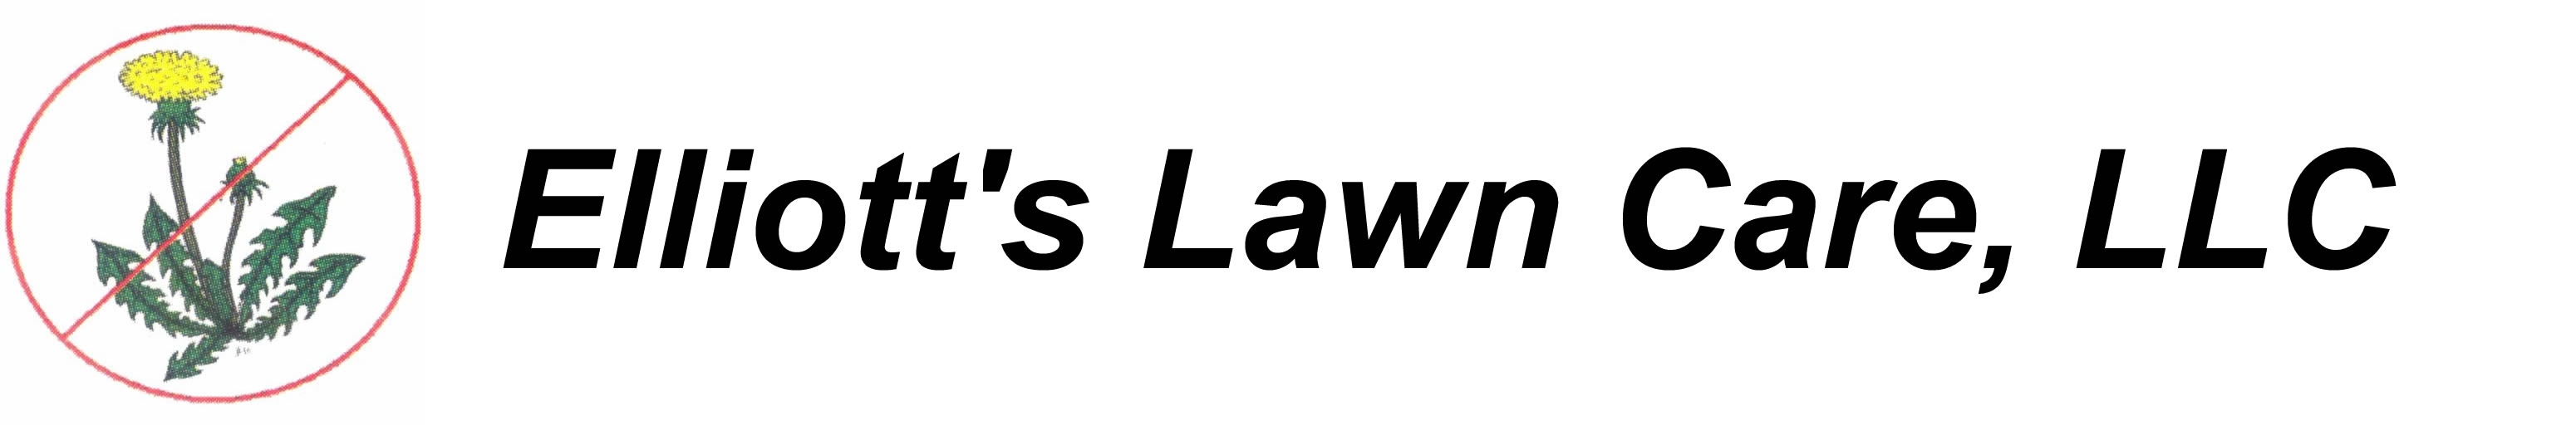 Elliott's Lawn Care, LLC